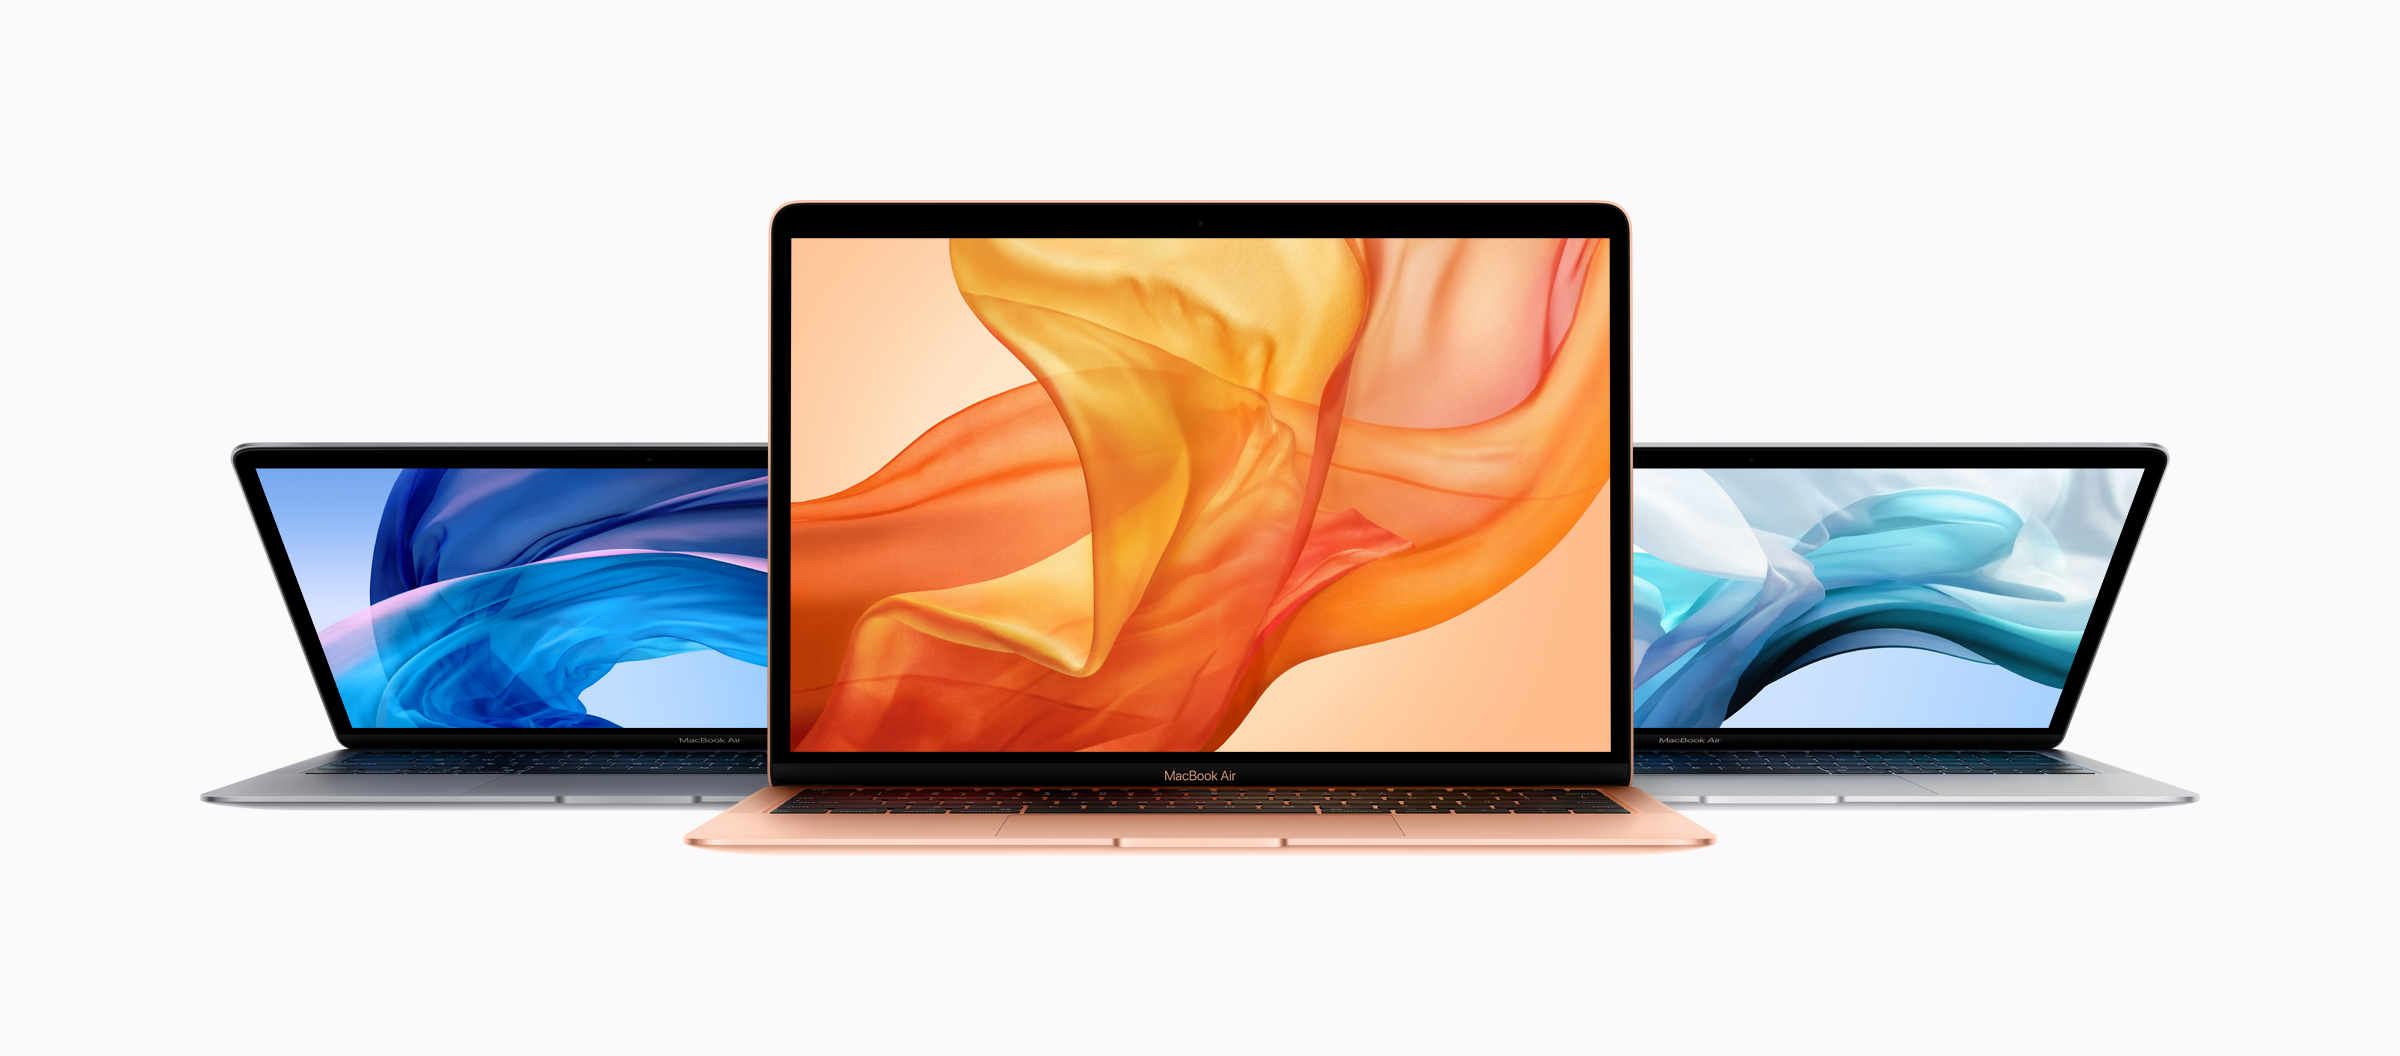 Download Facetime For Mac Laptop